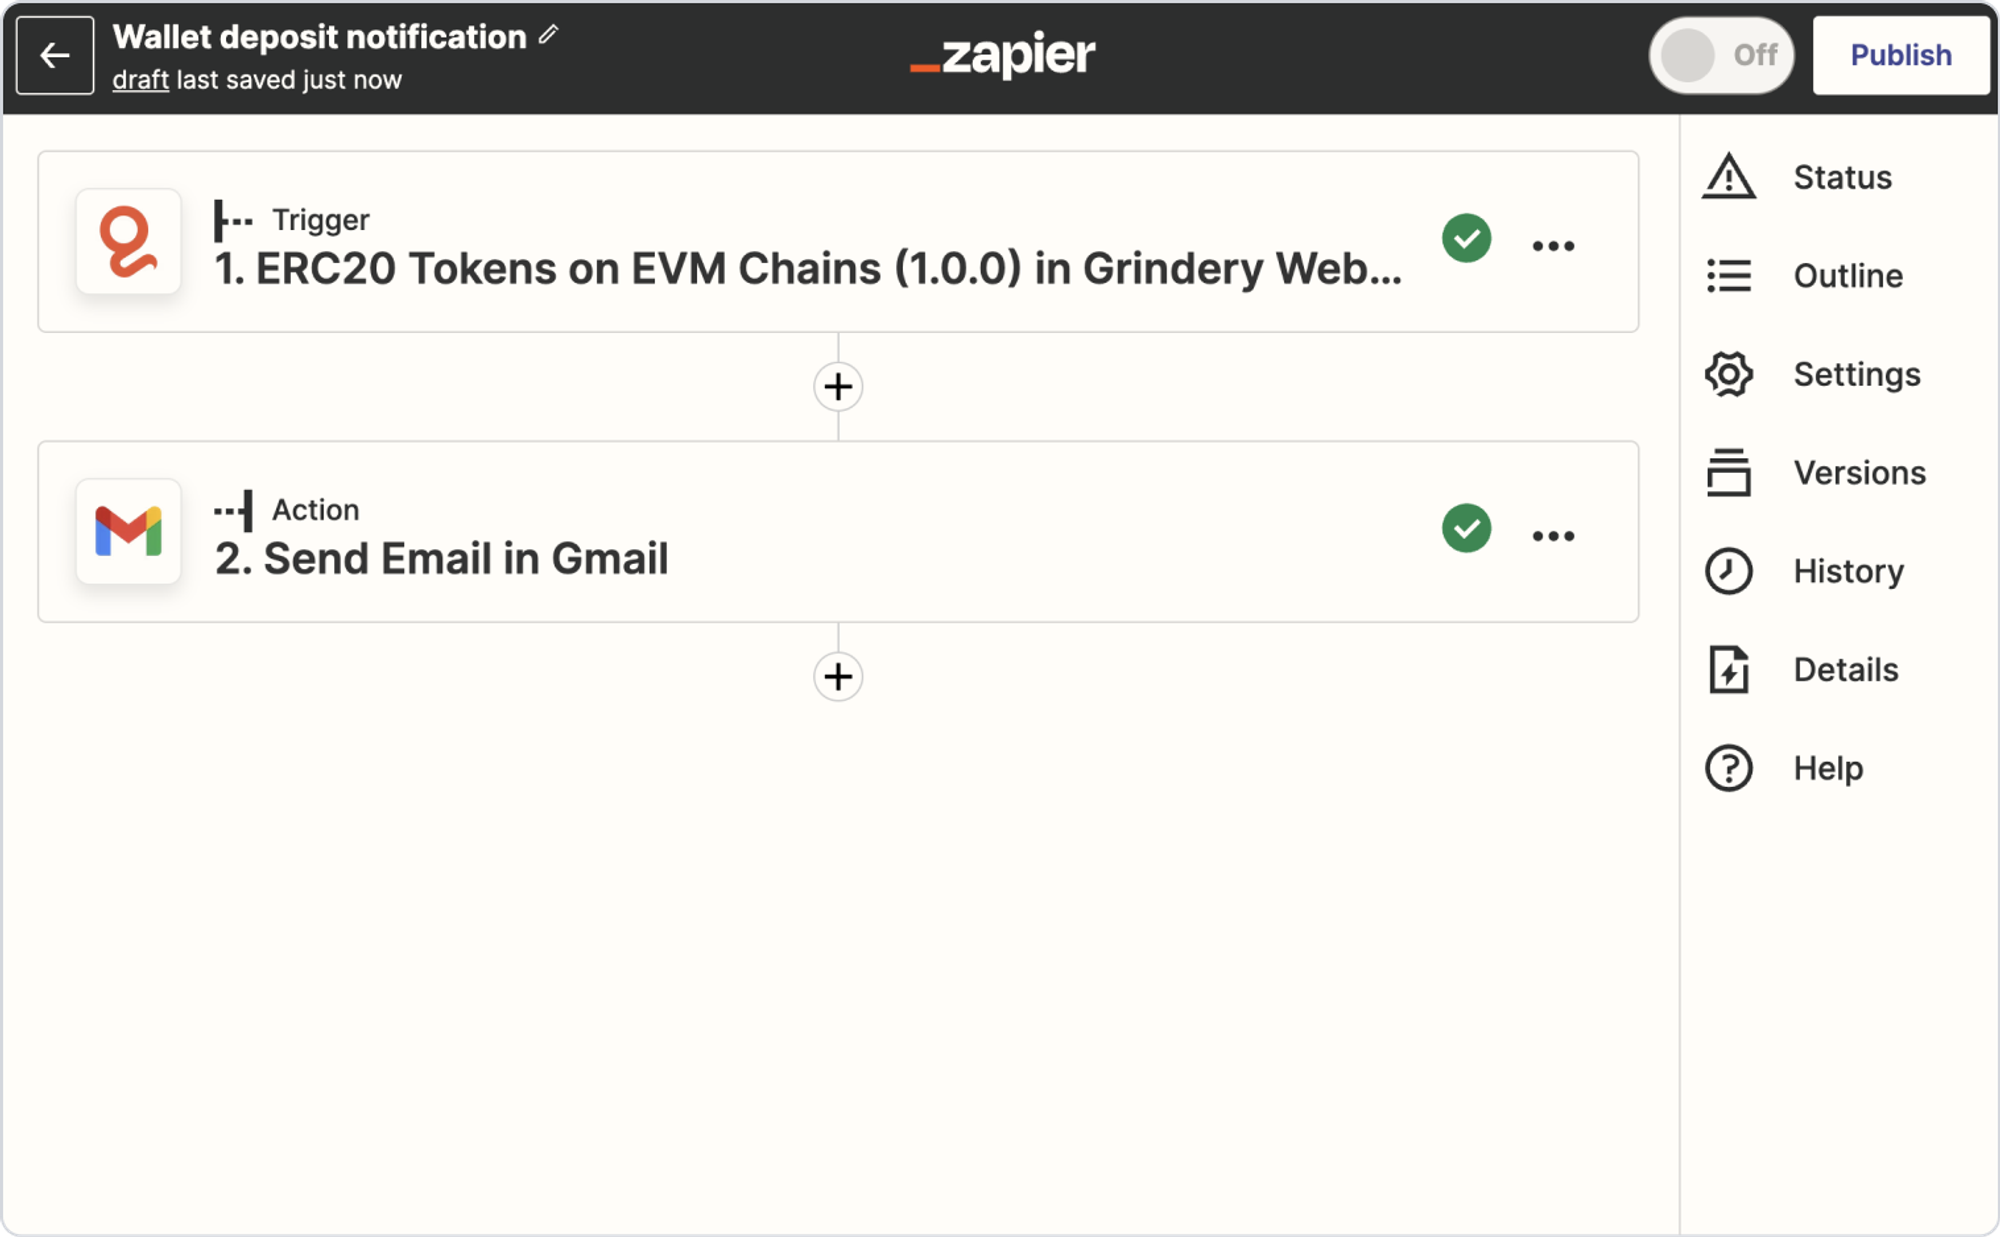 Figure 1. Sample workflow in Zapier for wallet deposit notification